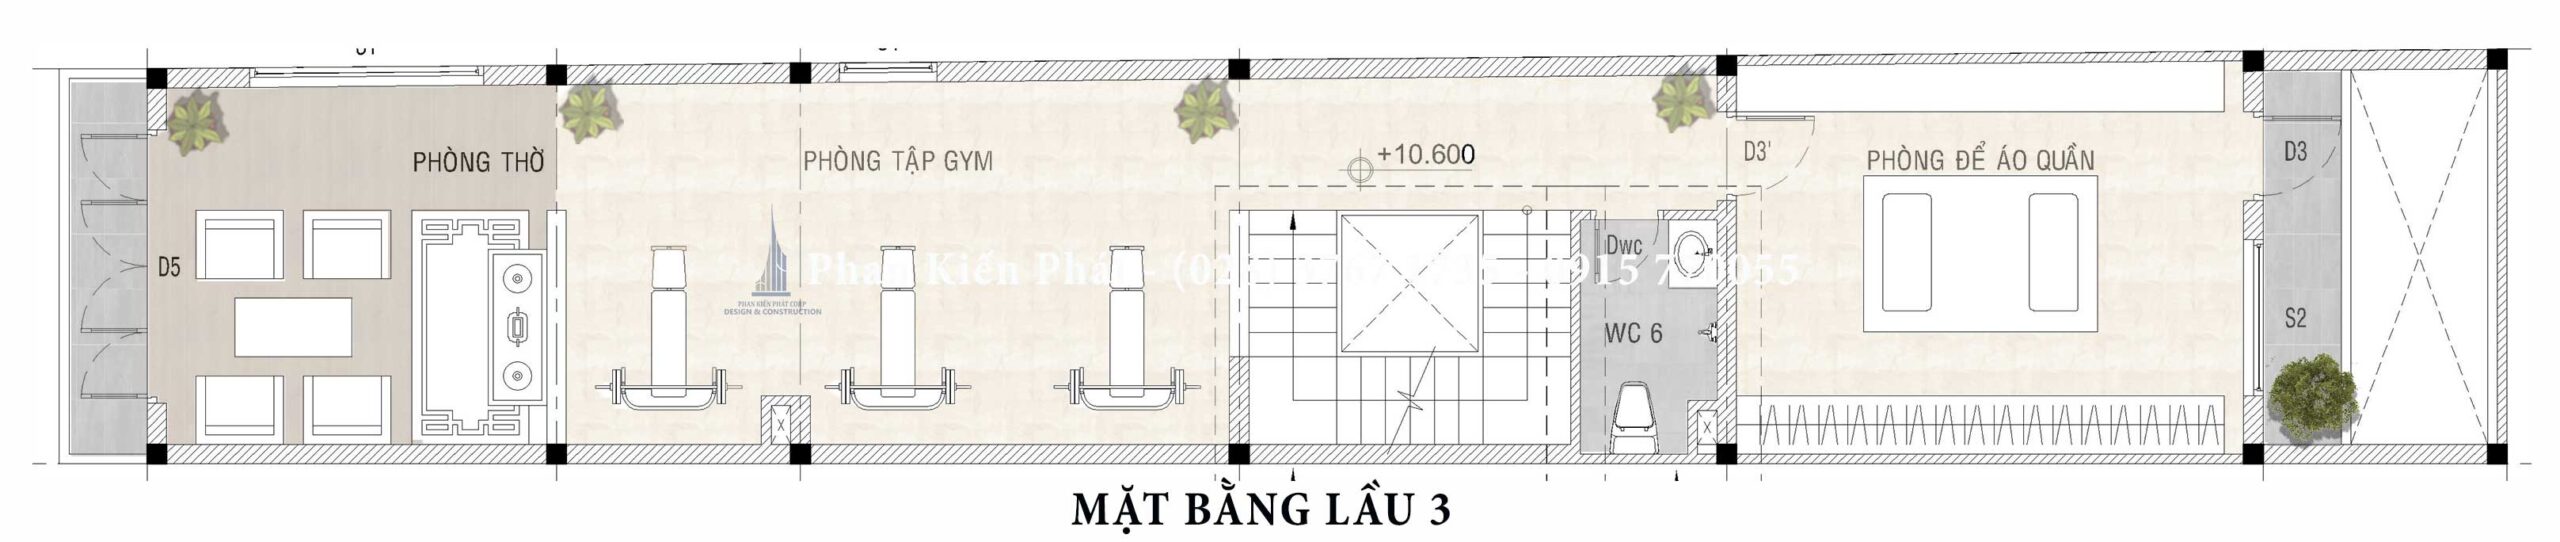 Mat Bang Lau 3 Nha Pho 4 Lau Ket Hop Phong Kham